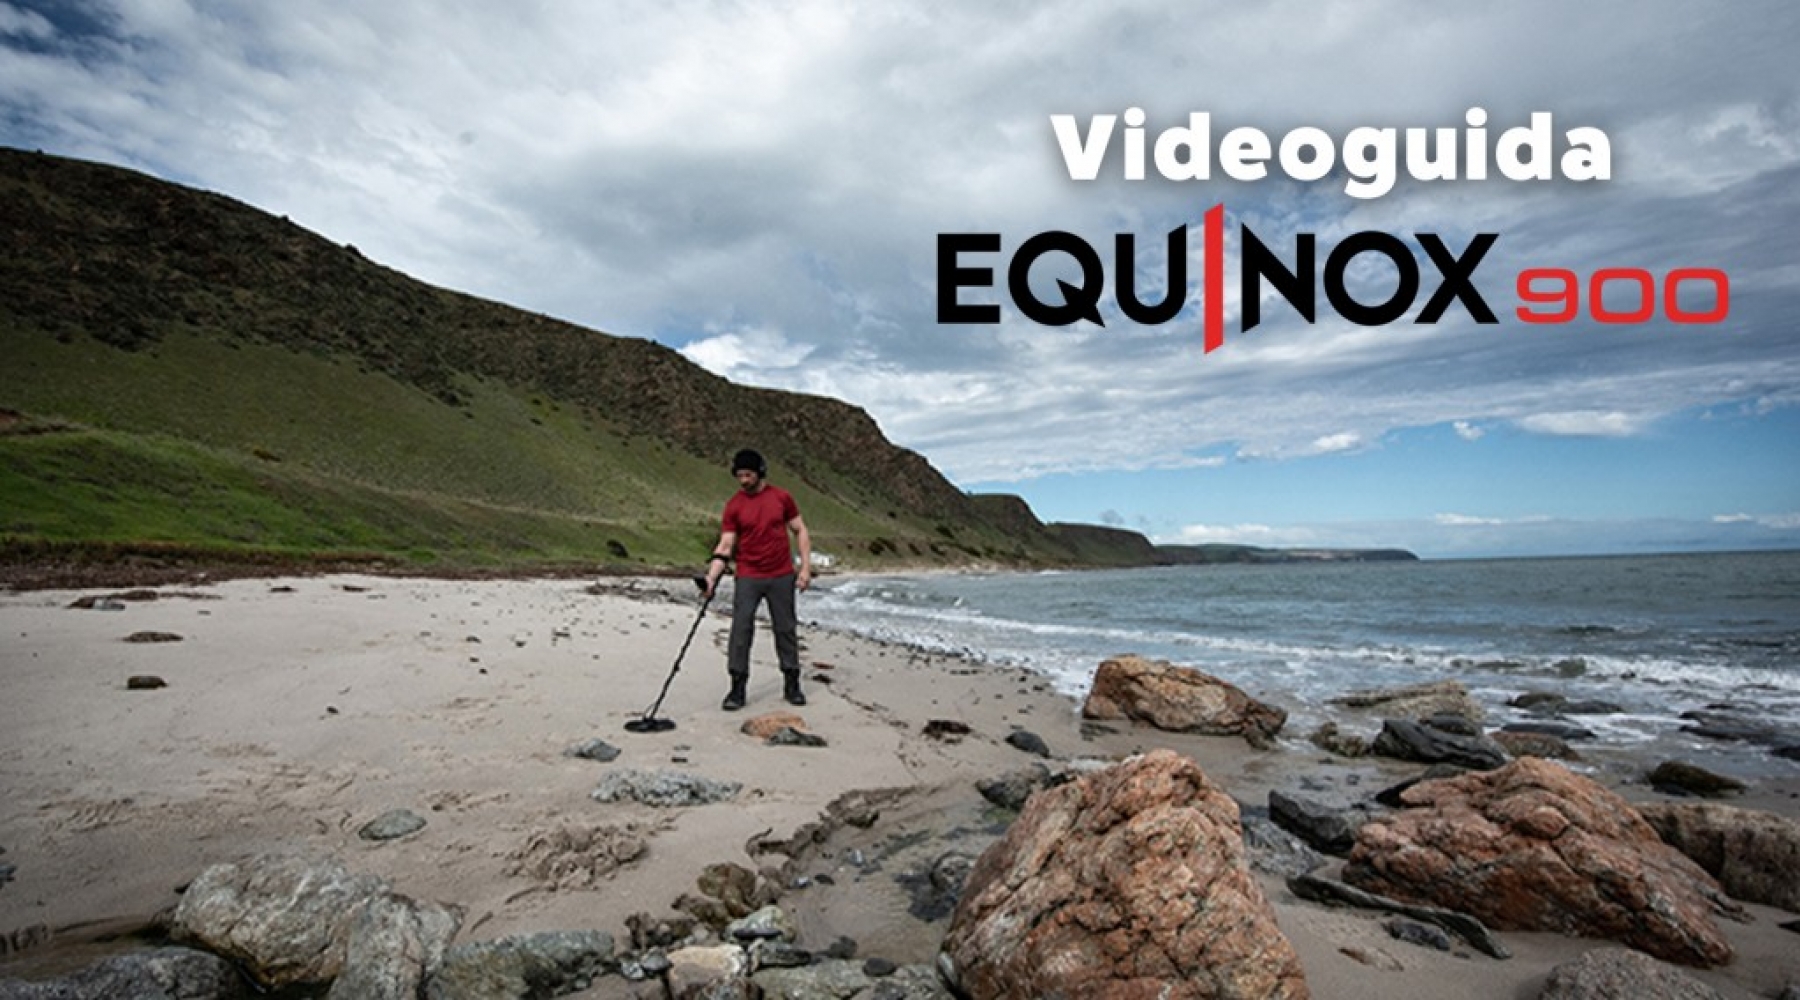 Videoguida Equinox 900: infinita libertà di ricerca